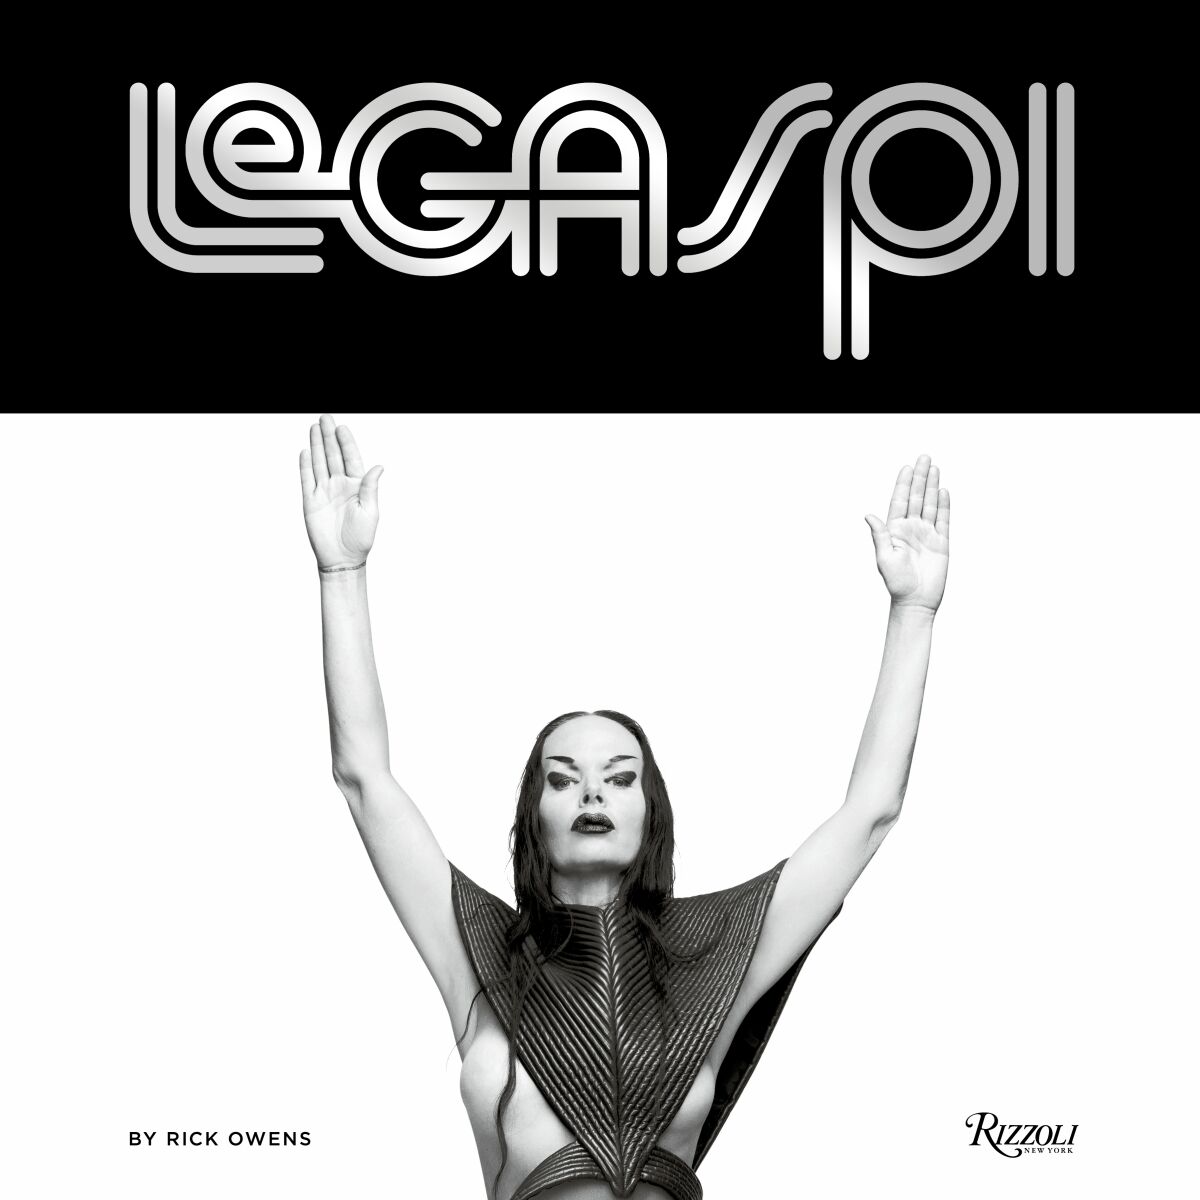 “Legaspi: Larry Legaspi, the ’70s, and the Future of Fashion"